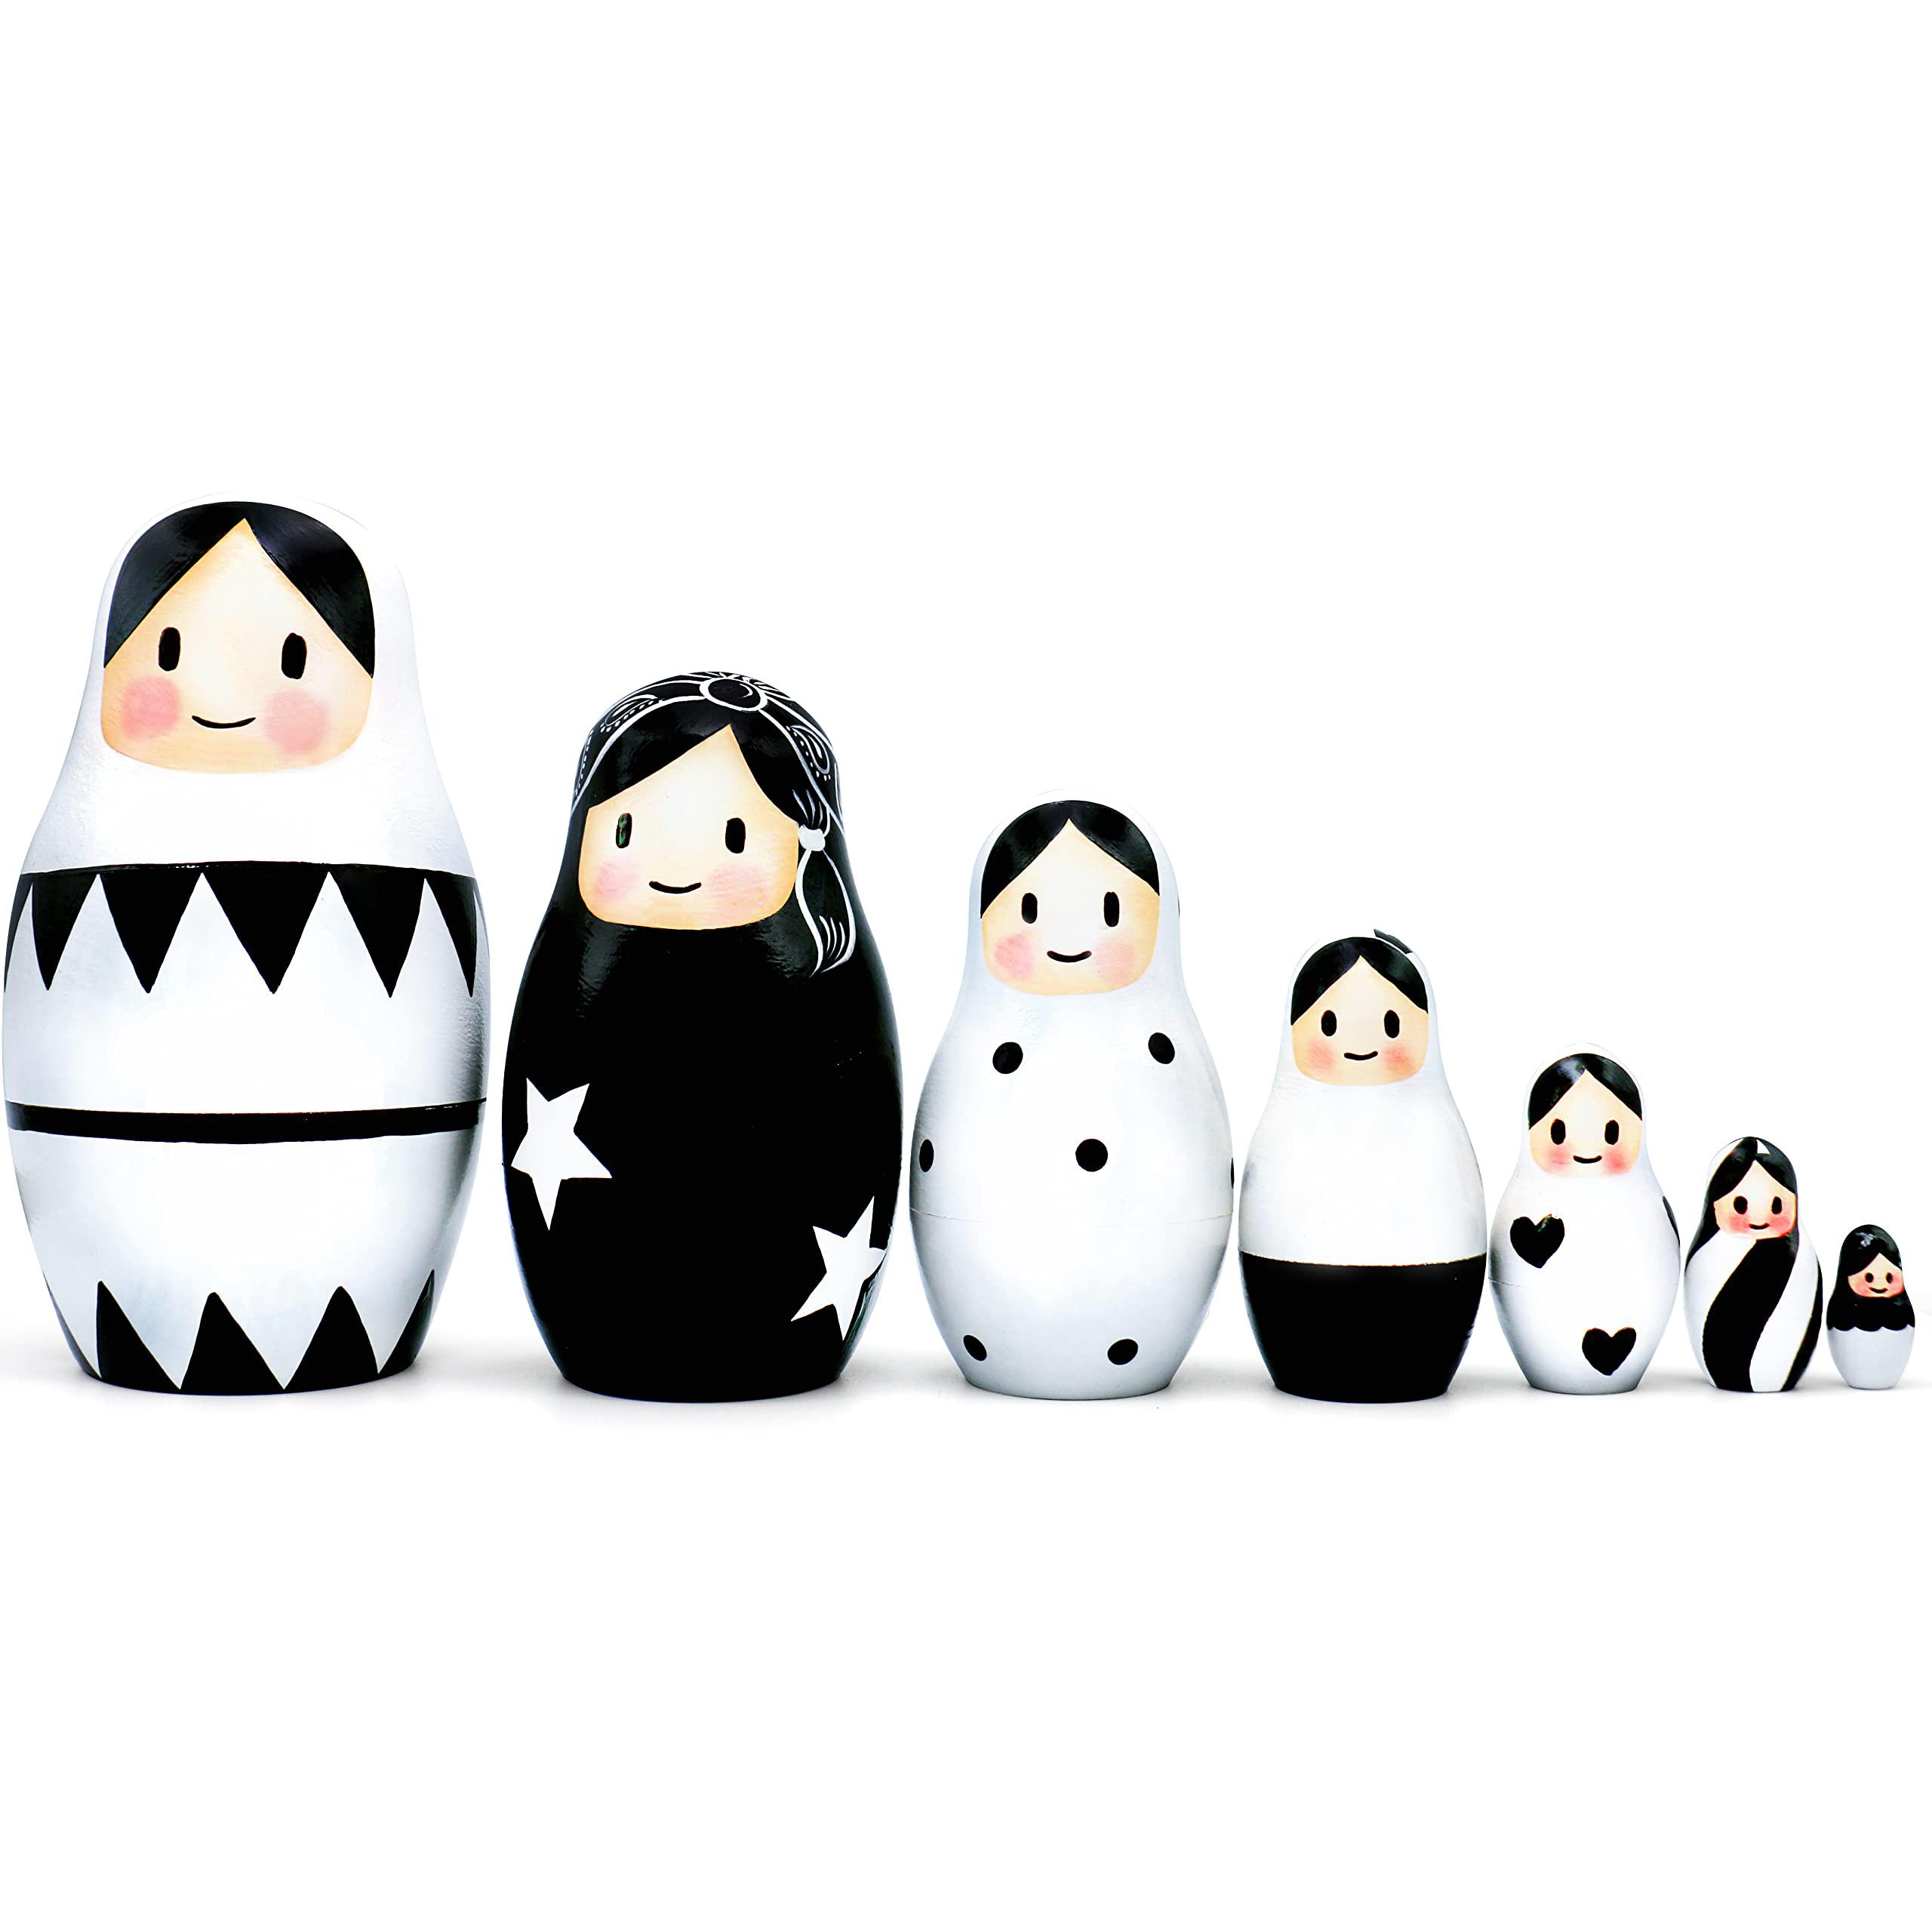 aevvv black and white russian nesting dolls set of 7 pcs - matryoshka doll for black and white decor - black and white decora